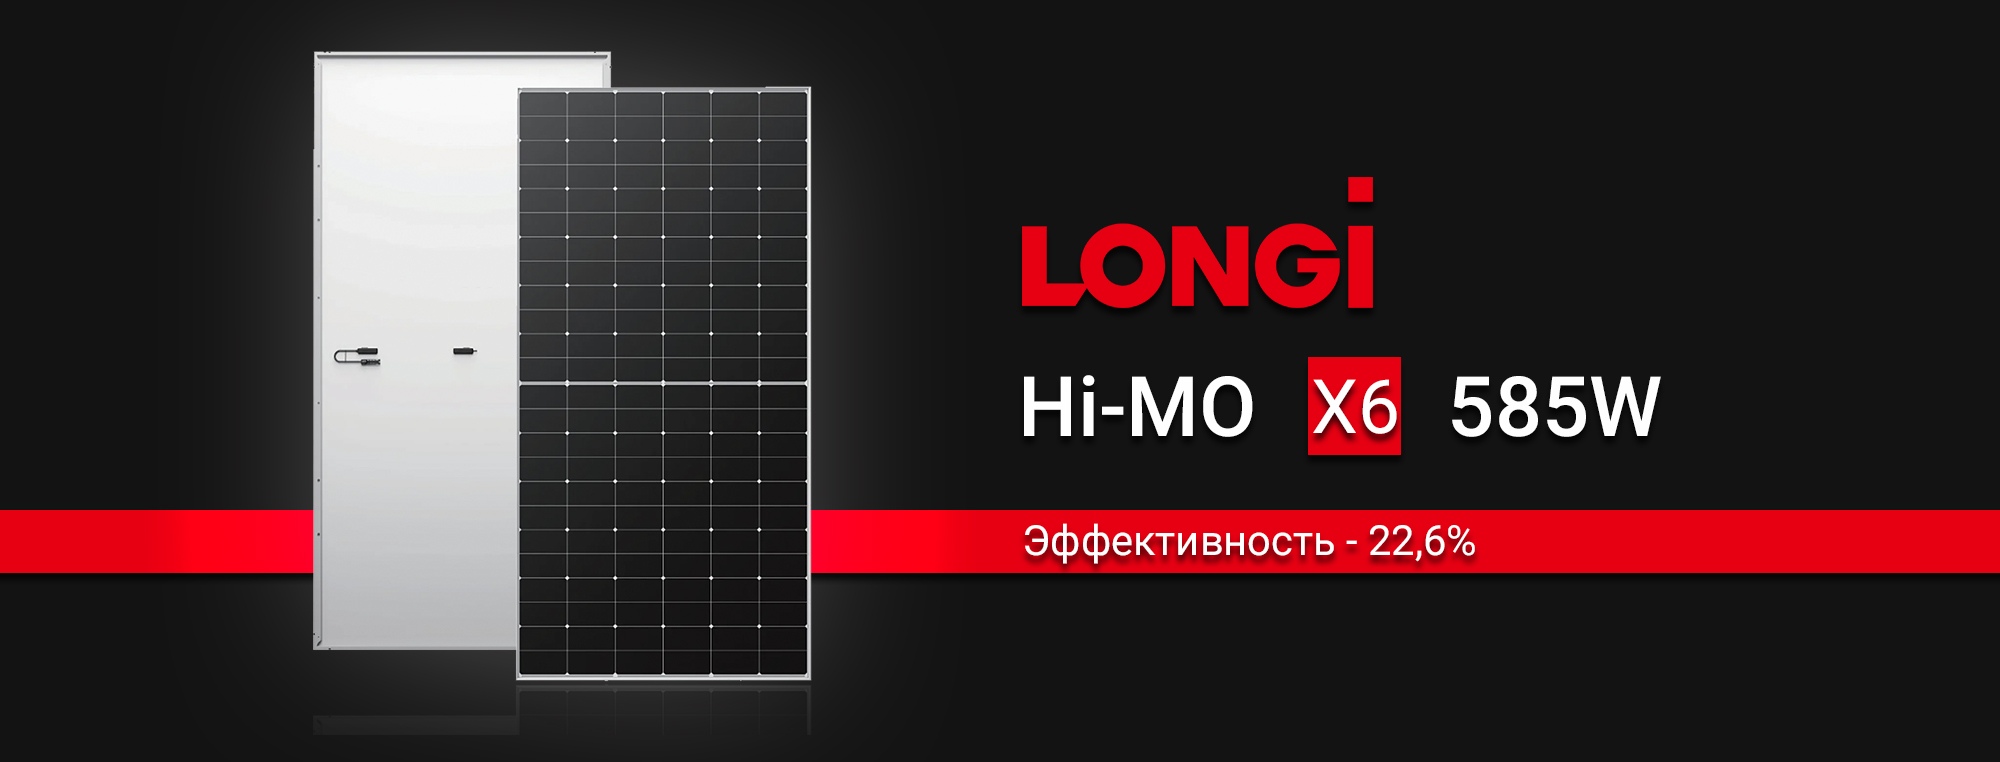 Panou fotovoltaic Longi Hi-MO X6 585W